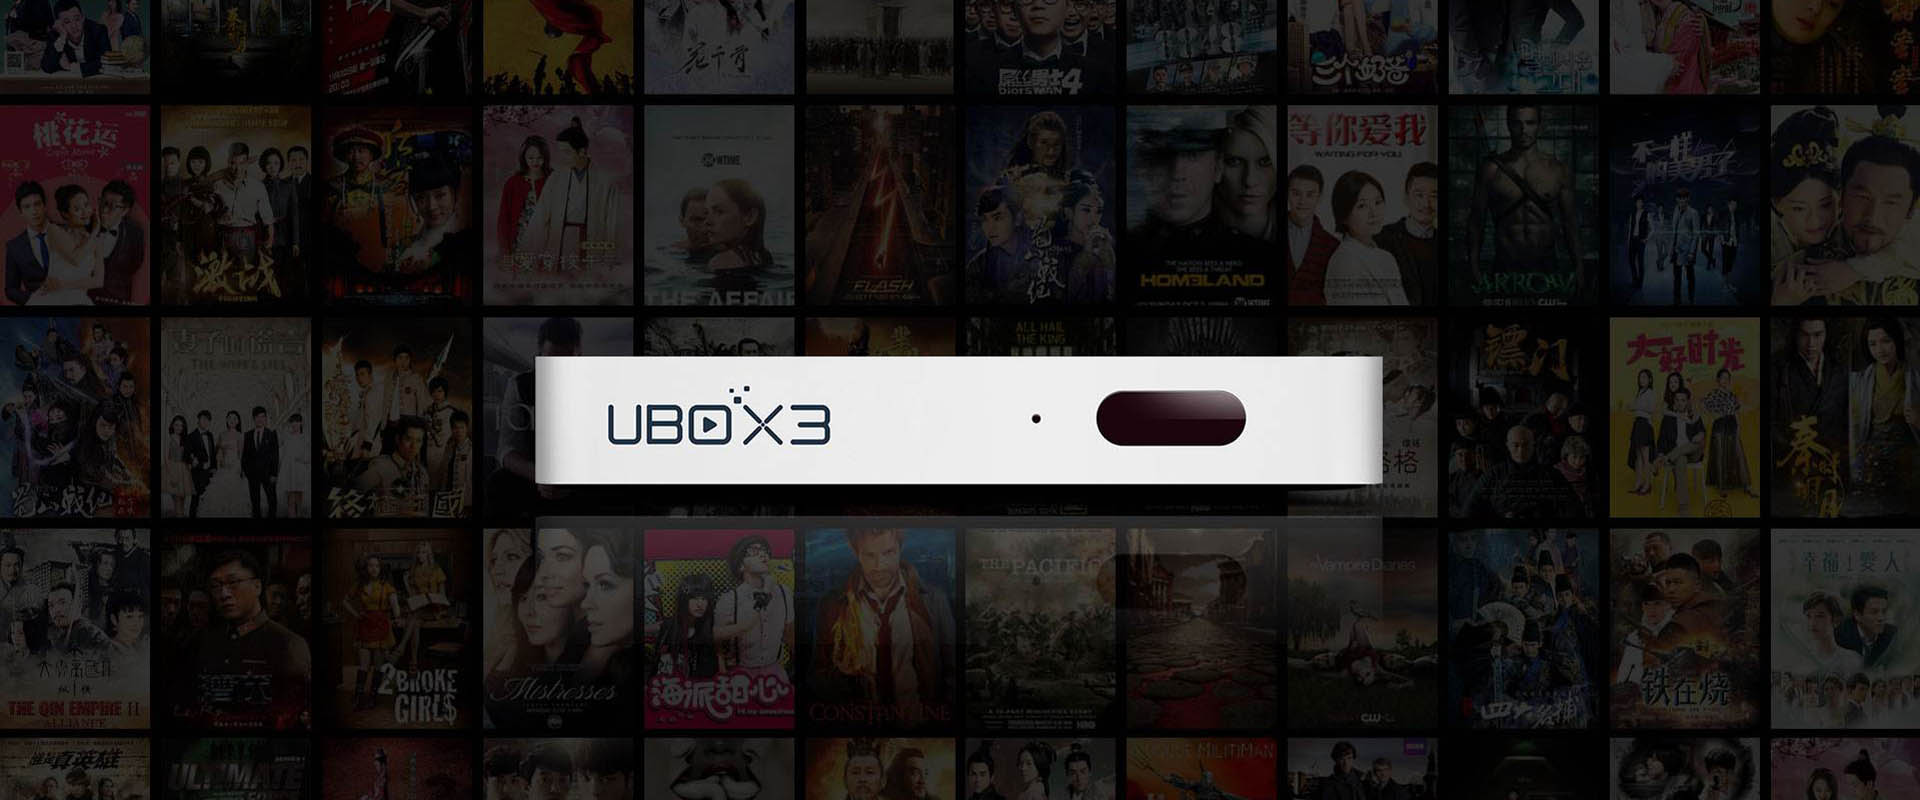 TV Box UBOX 3 - Assistir programas de TV gratuitos na China continental